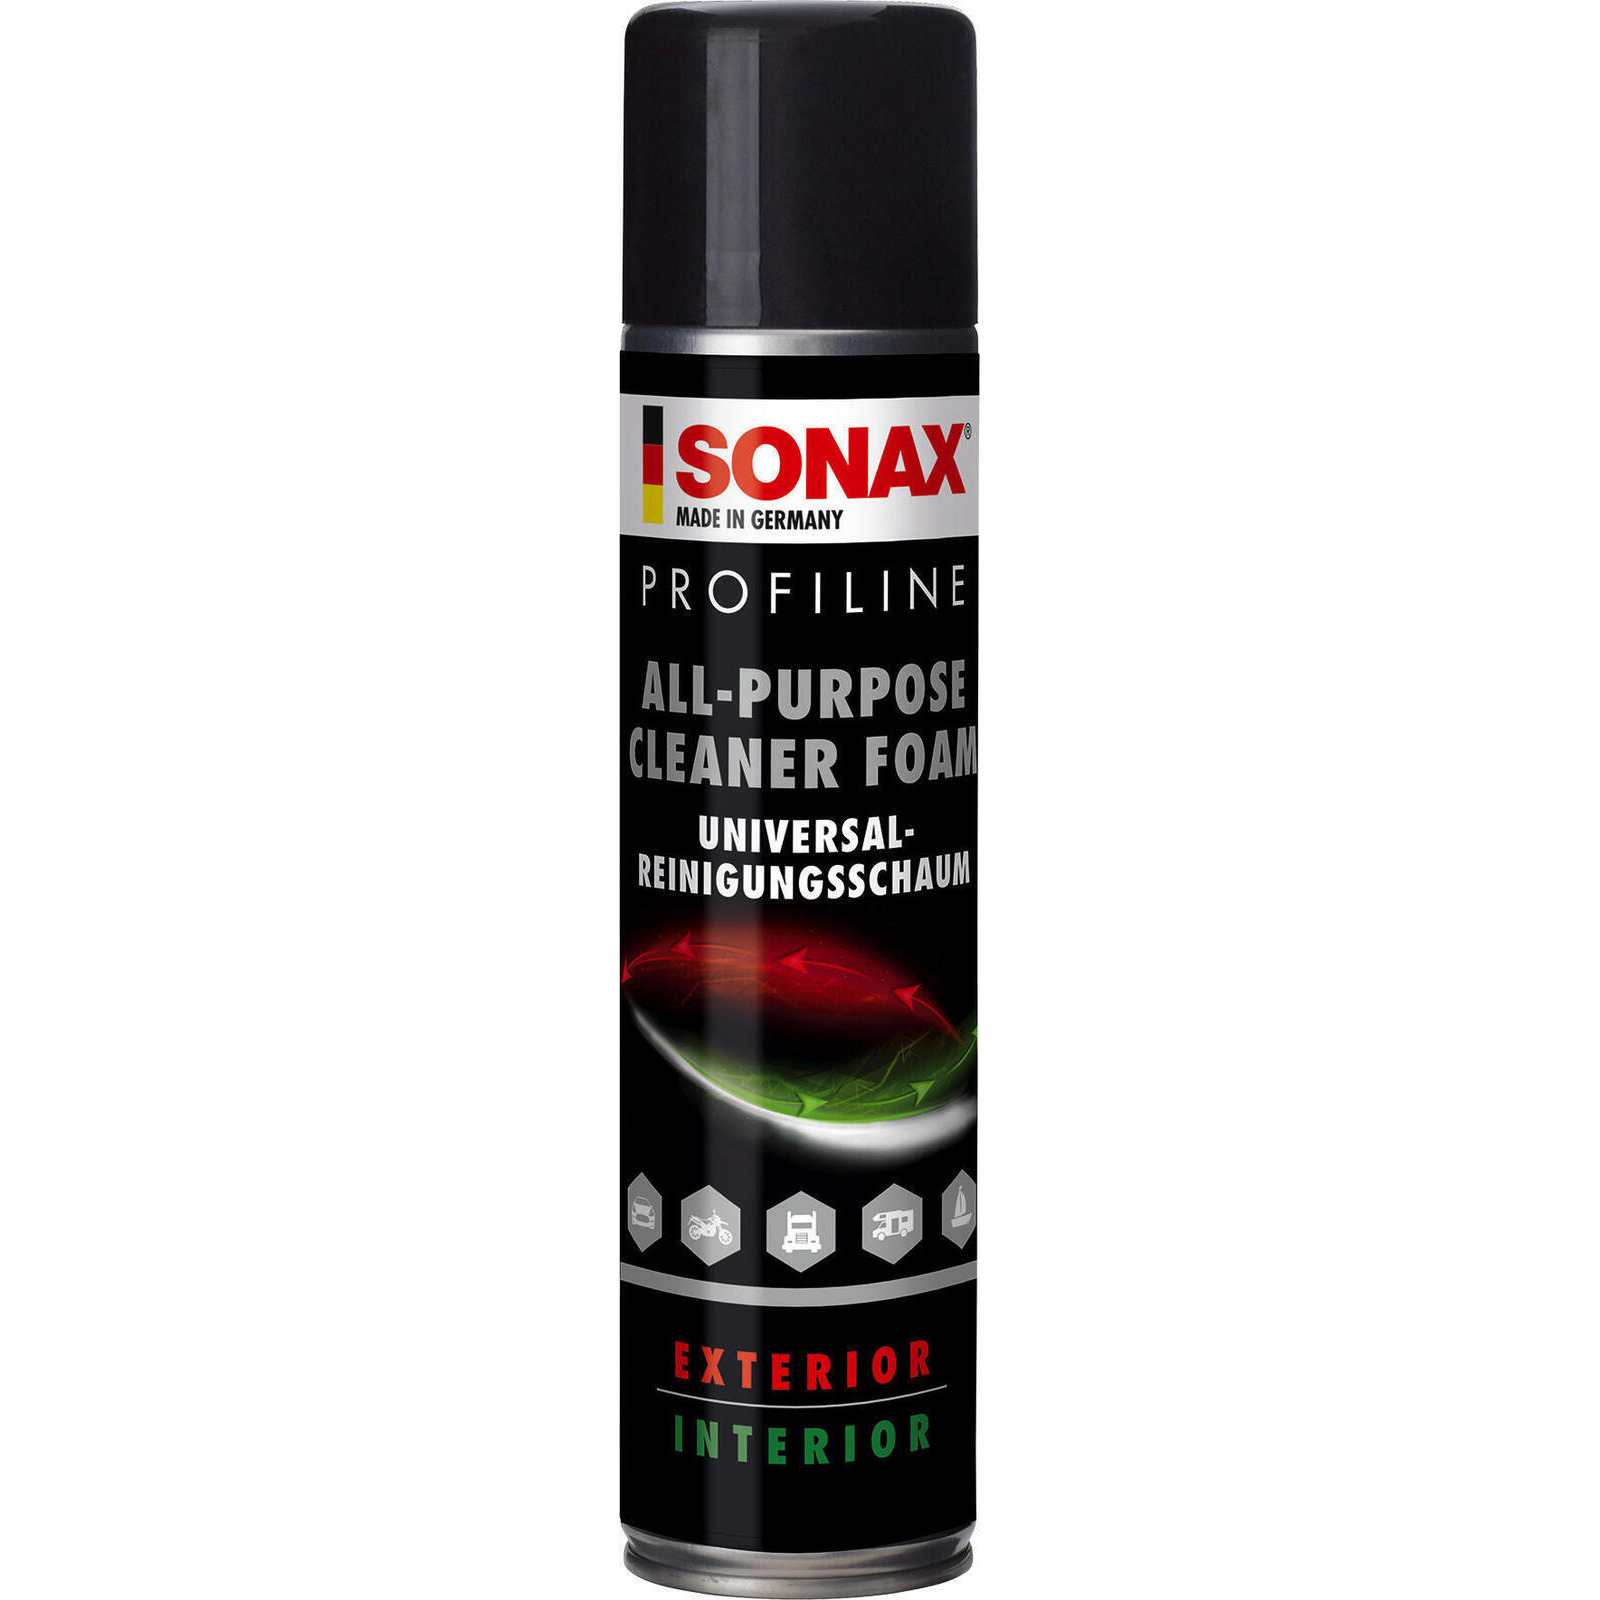 SONAX Paint Cleaner PROFILINE All-Purpose Cleaner Foam (APC)